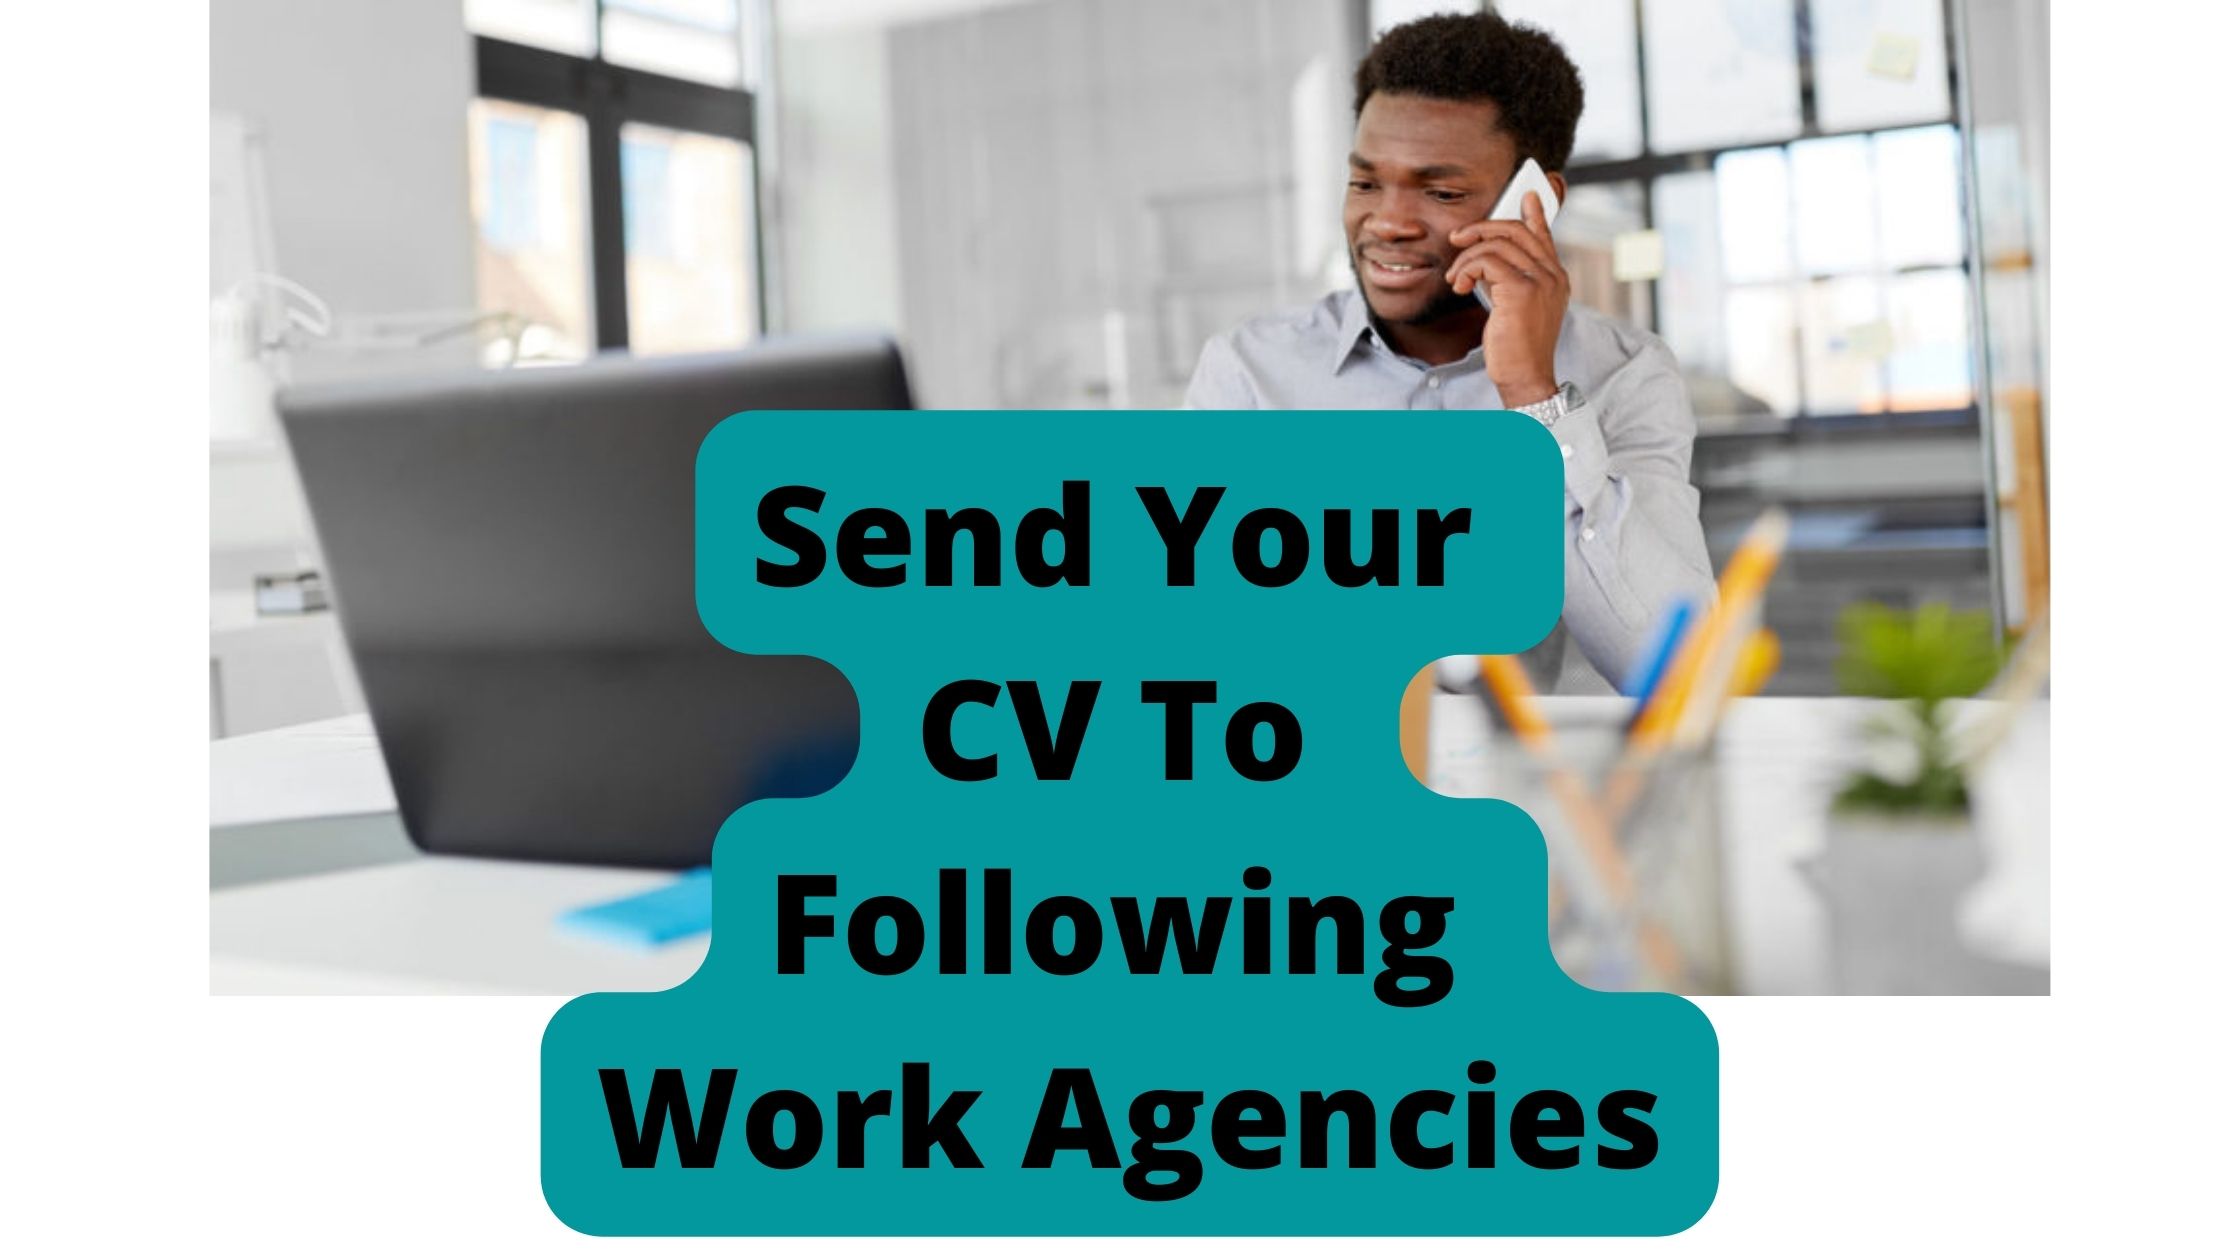 Send Your CV To Following Work Agencies